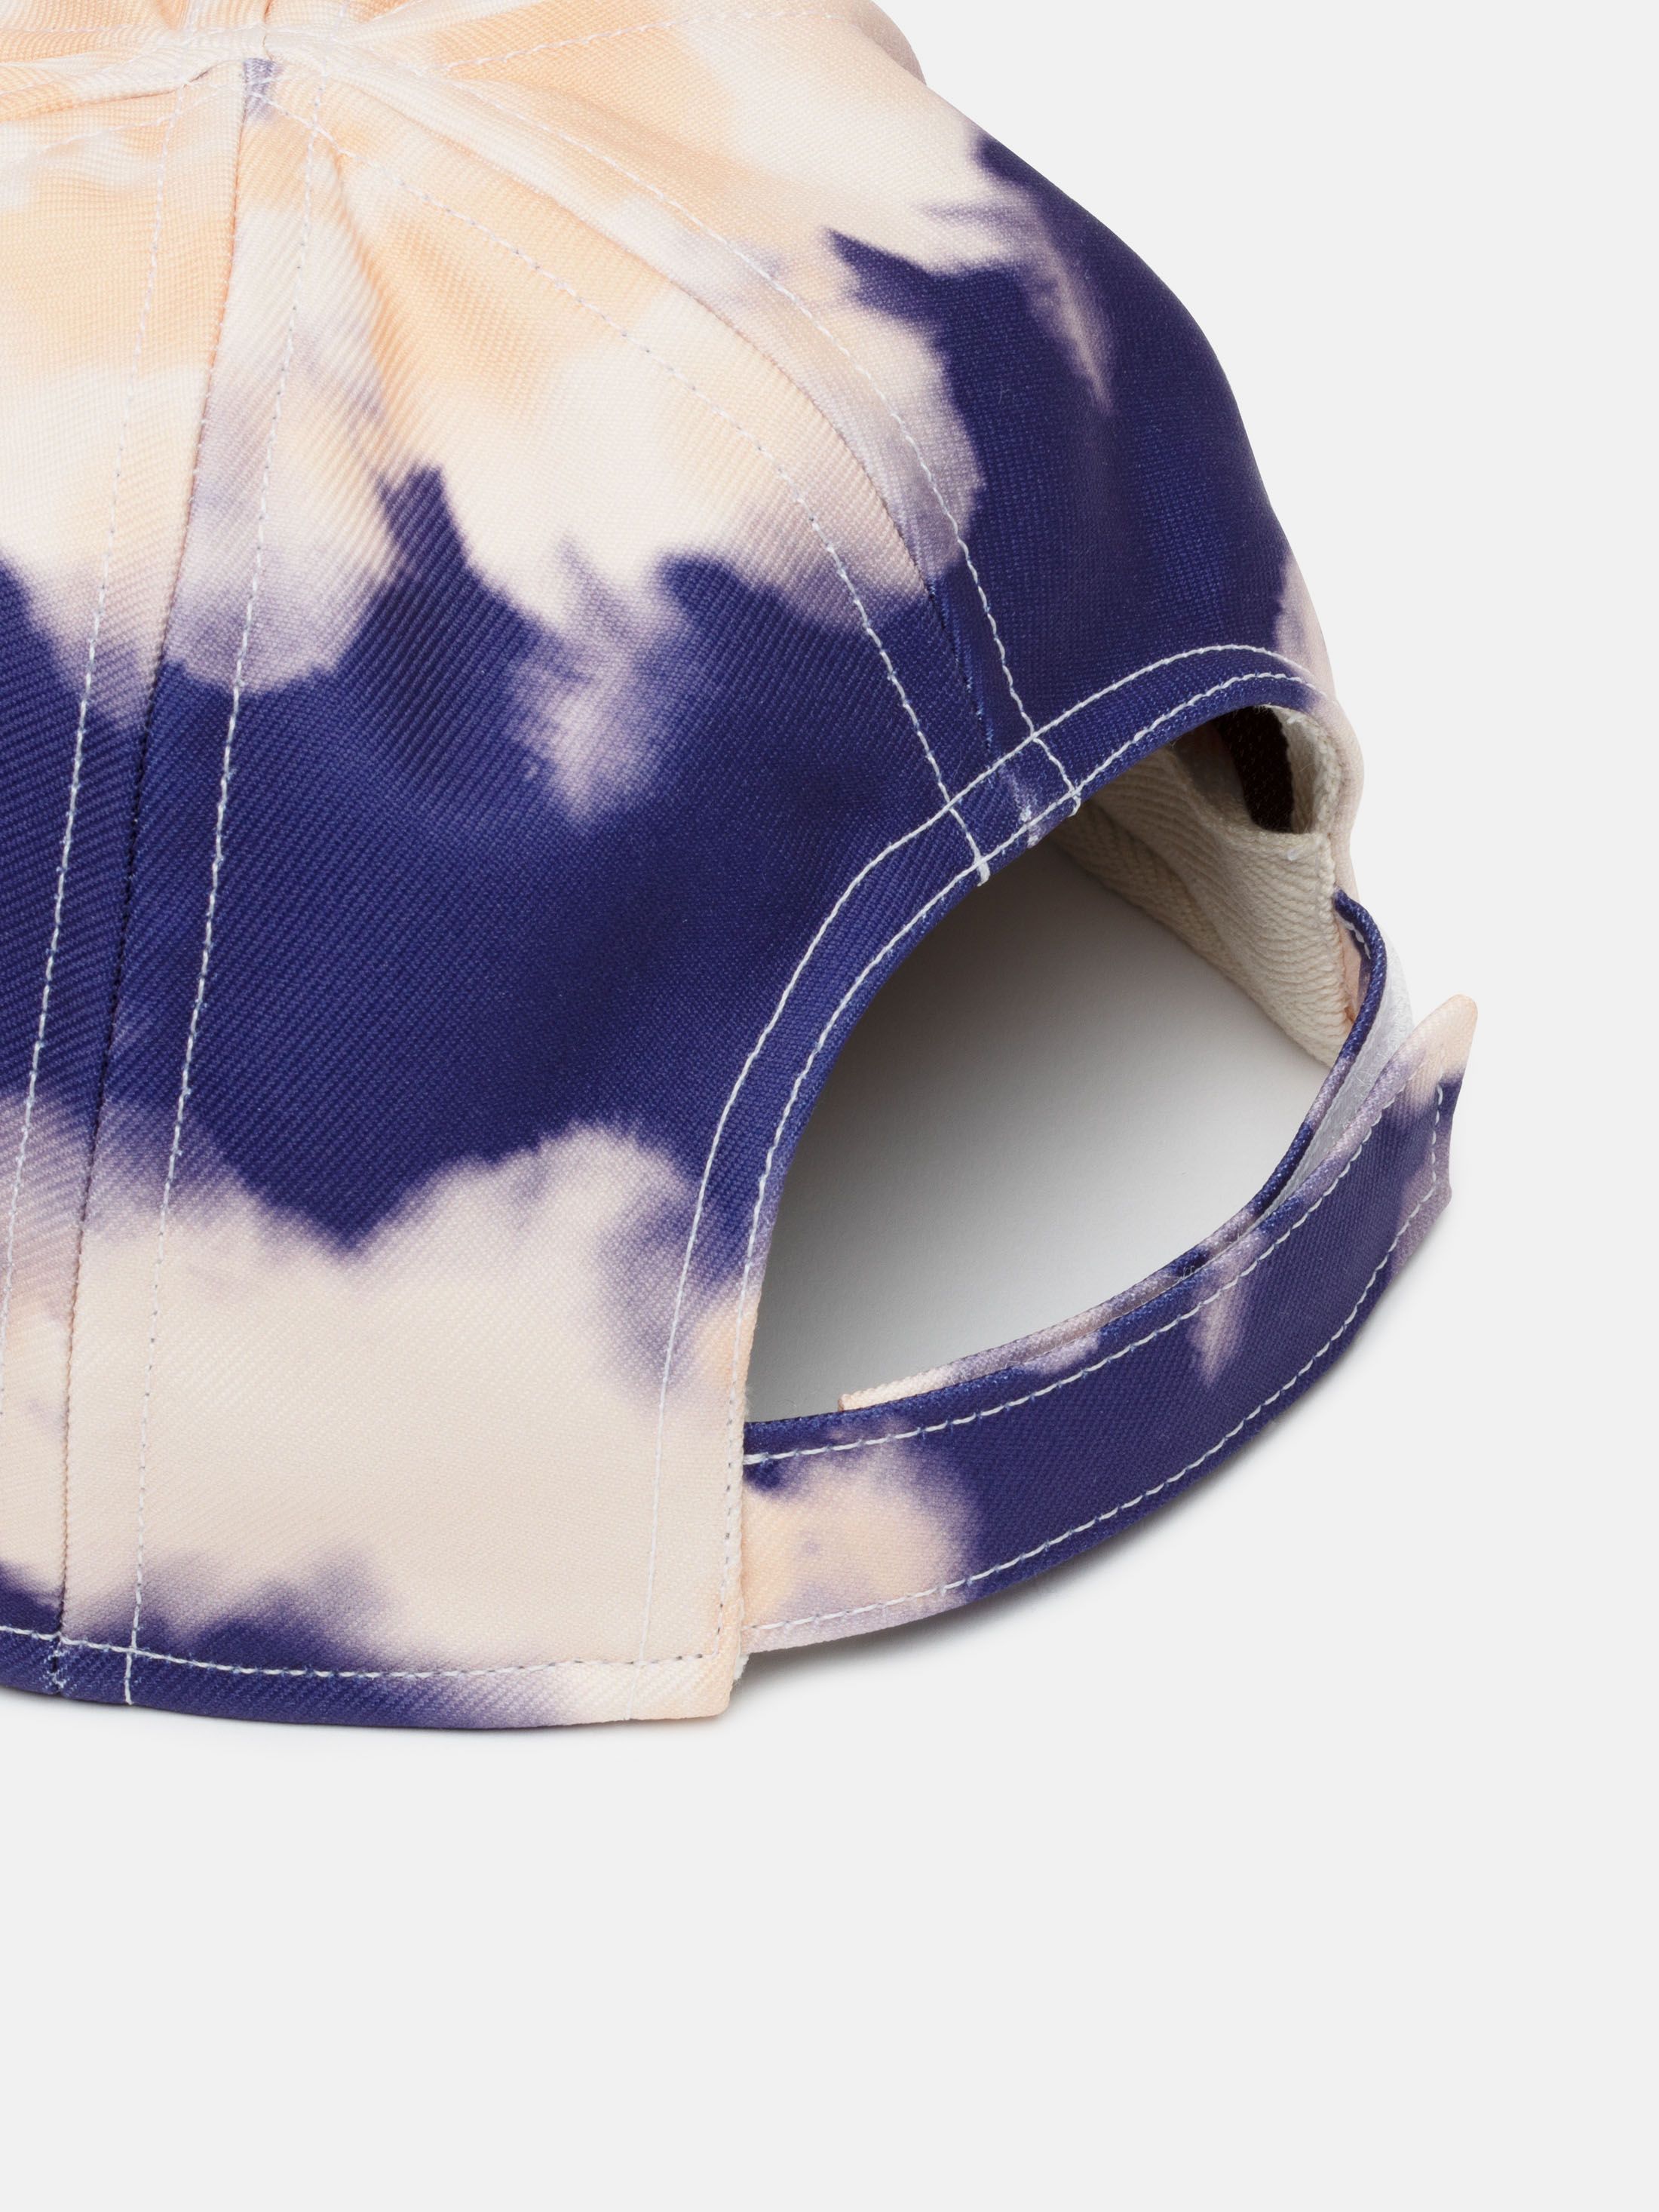 design your own baseball cap